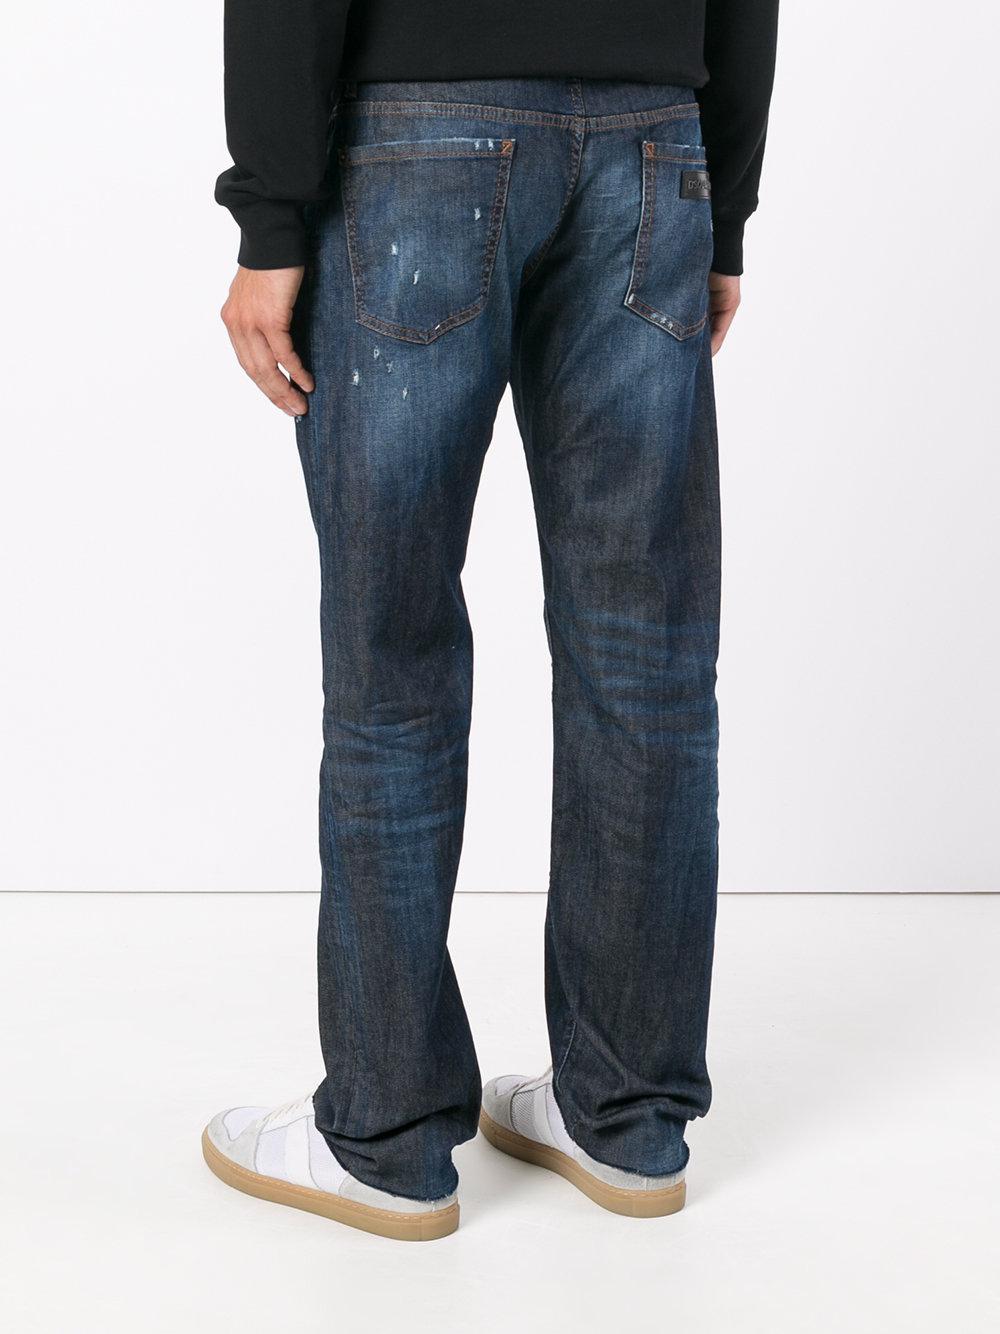 DSquared² Denim Loose Fit Jeans in Blue for Men - Lyst